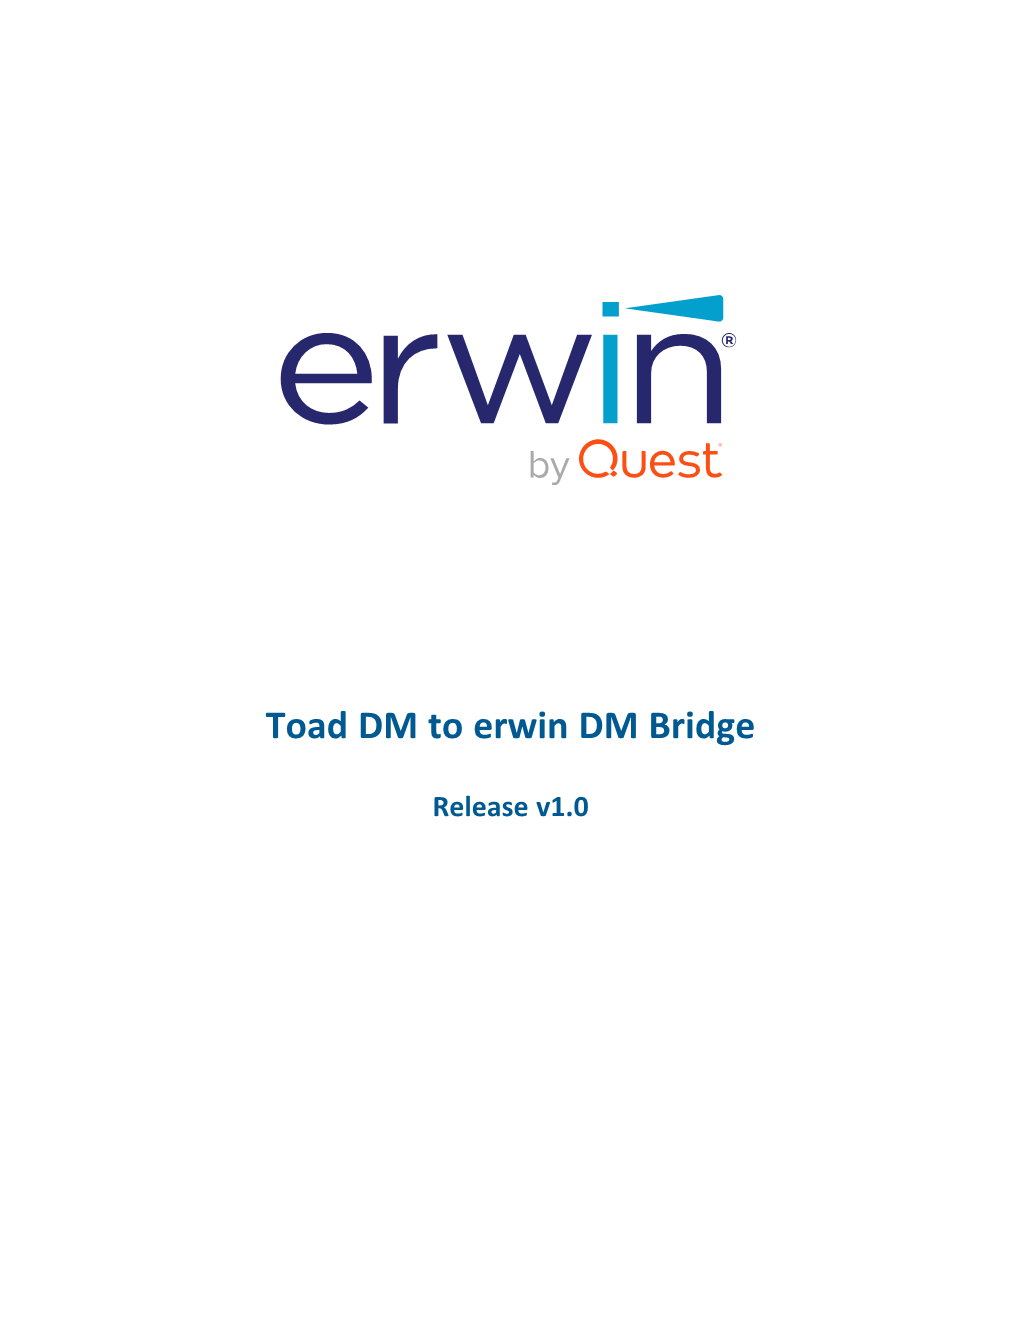 Toad DM to Erwin DM Bridge Guide